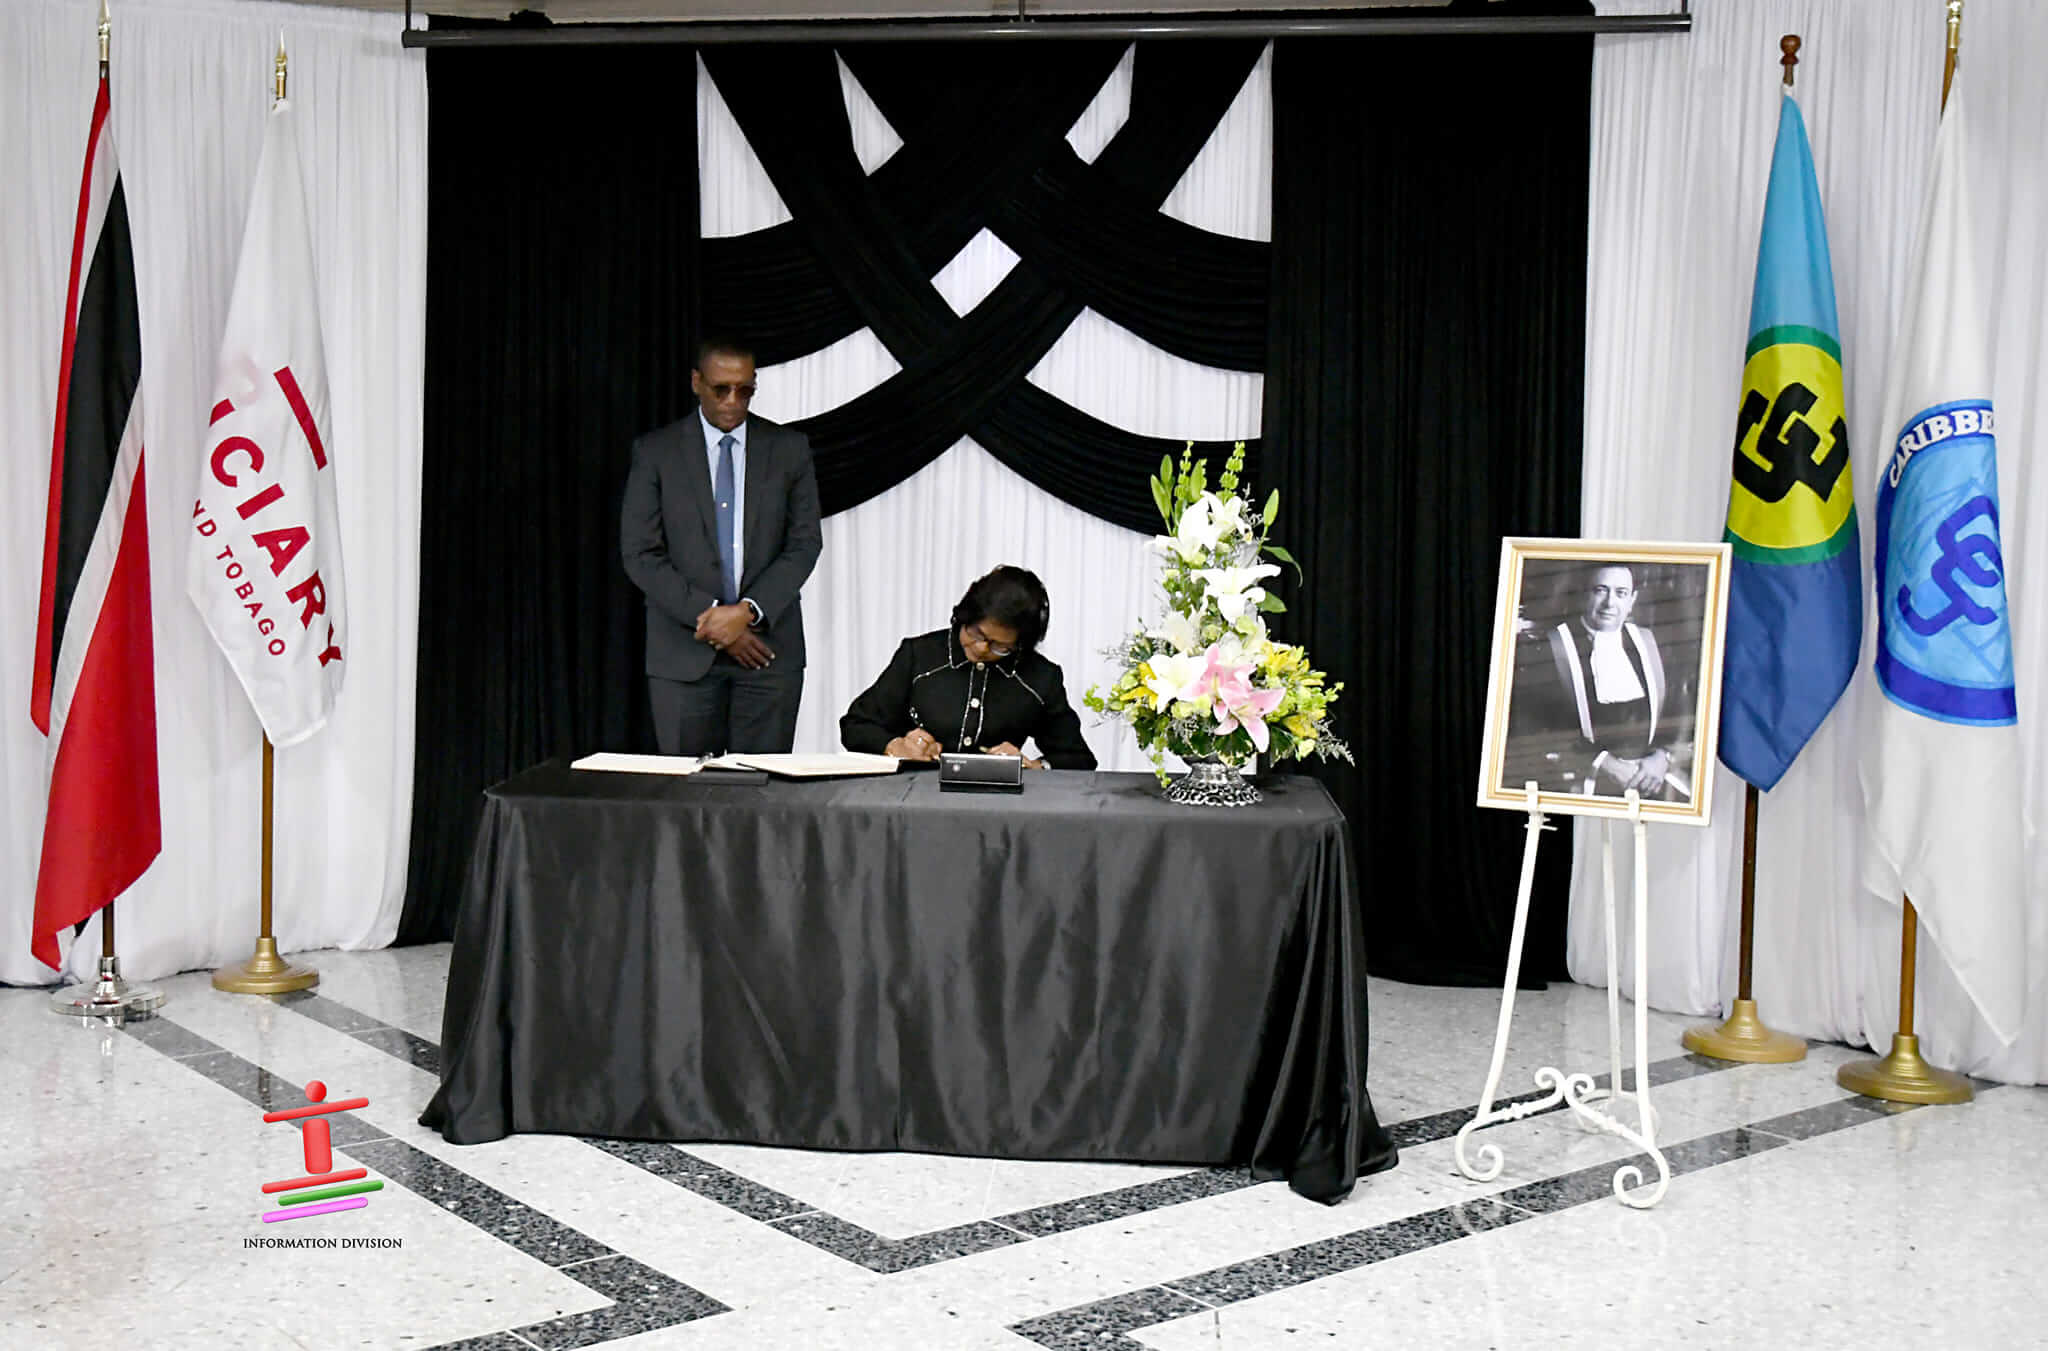 Her Excellency signs Condolence Book for former Chief Justice, Mr. Justice Michael Anthony de la Bastide TC.